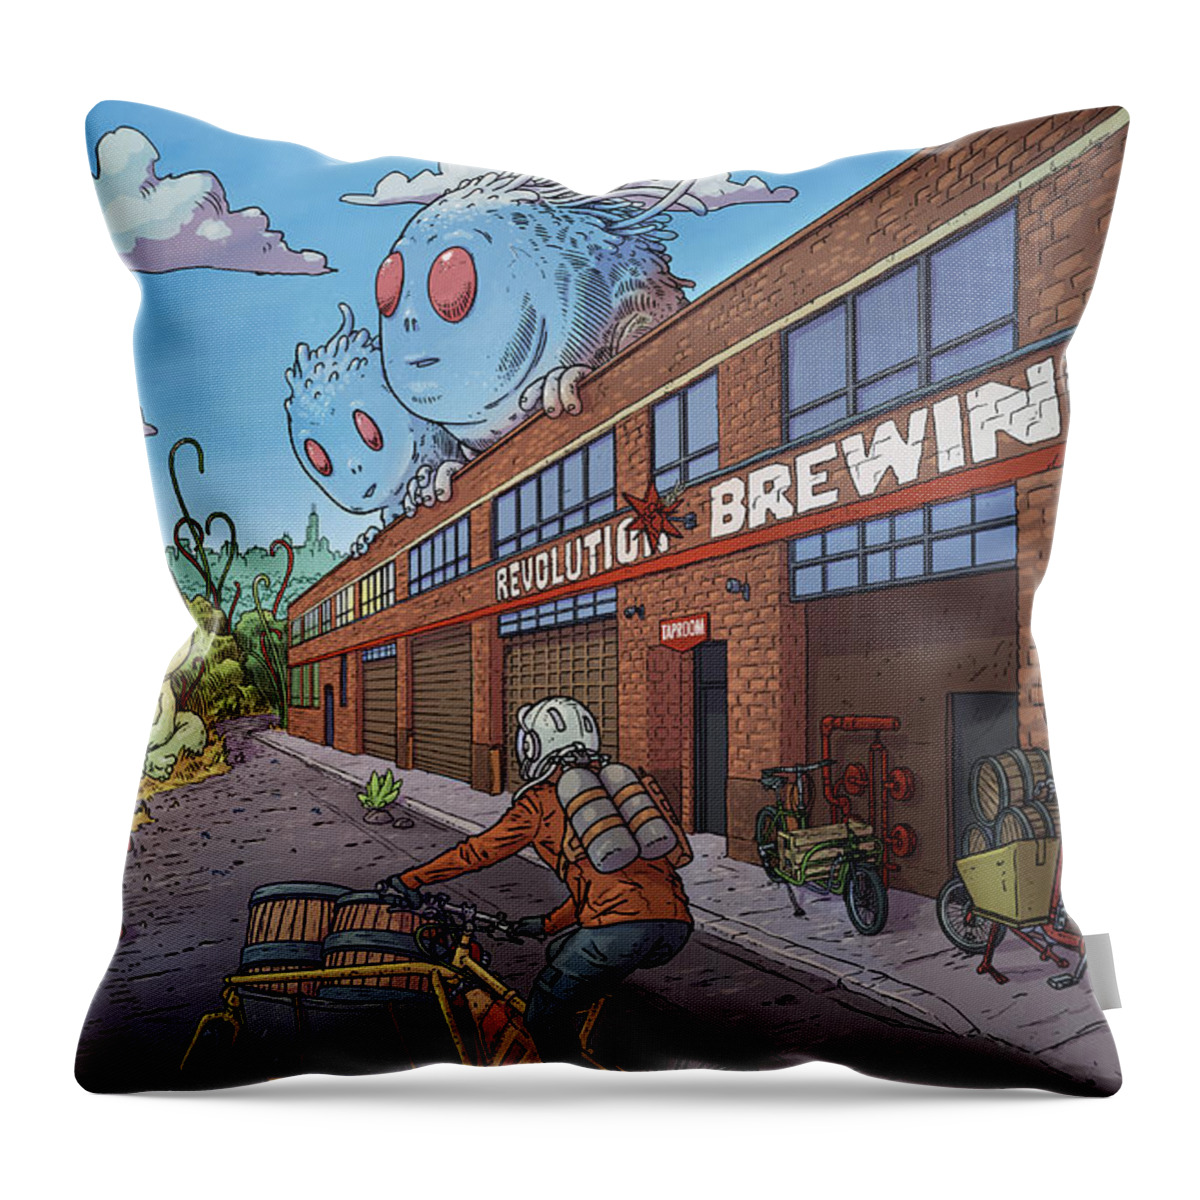  Throw Pillow featuring the digital art Revolution Brewing by EvanArt - Evan Miller